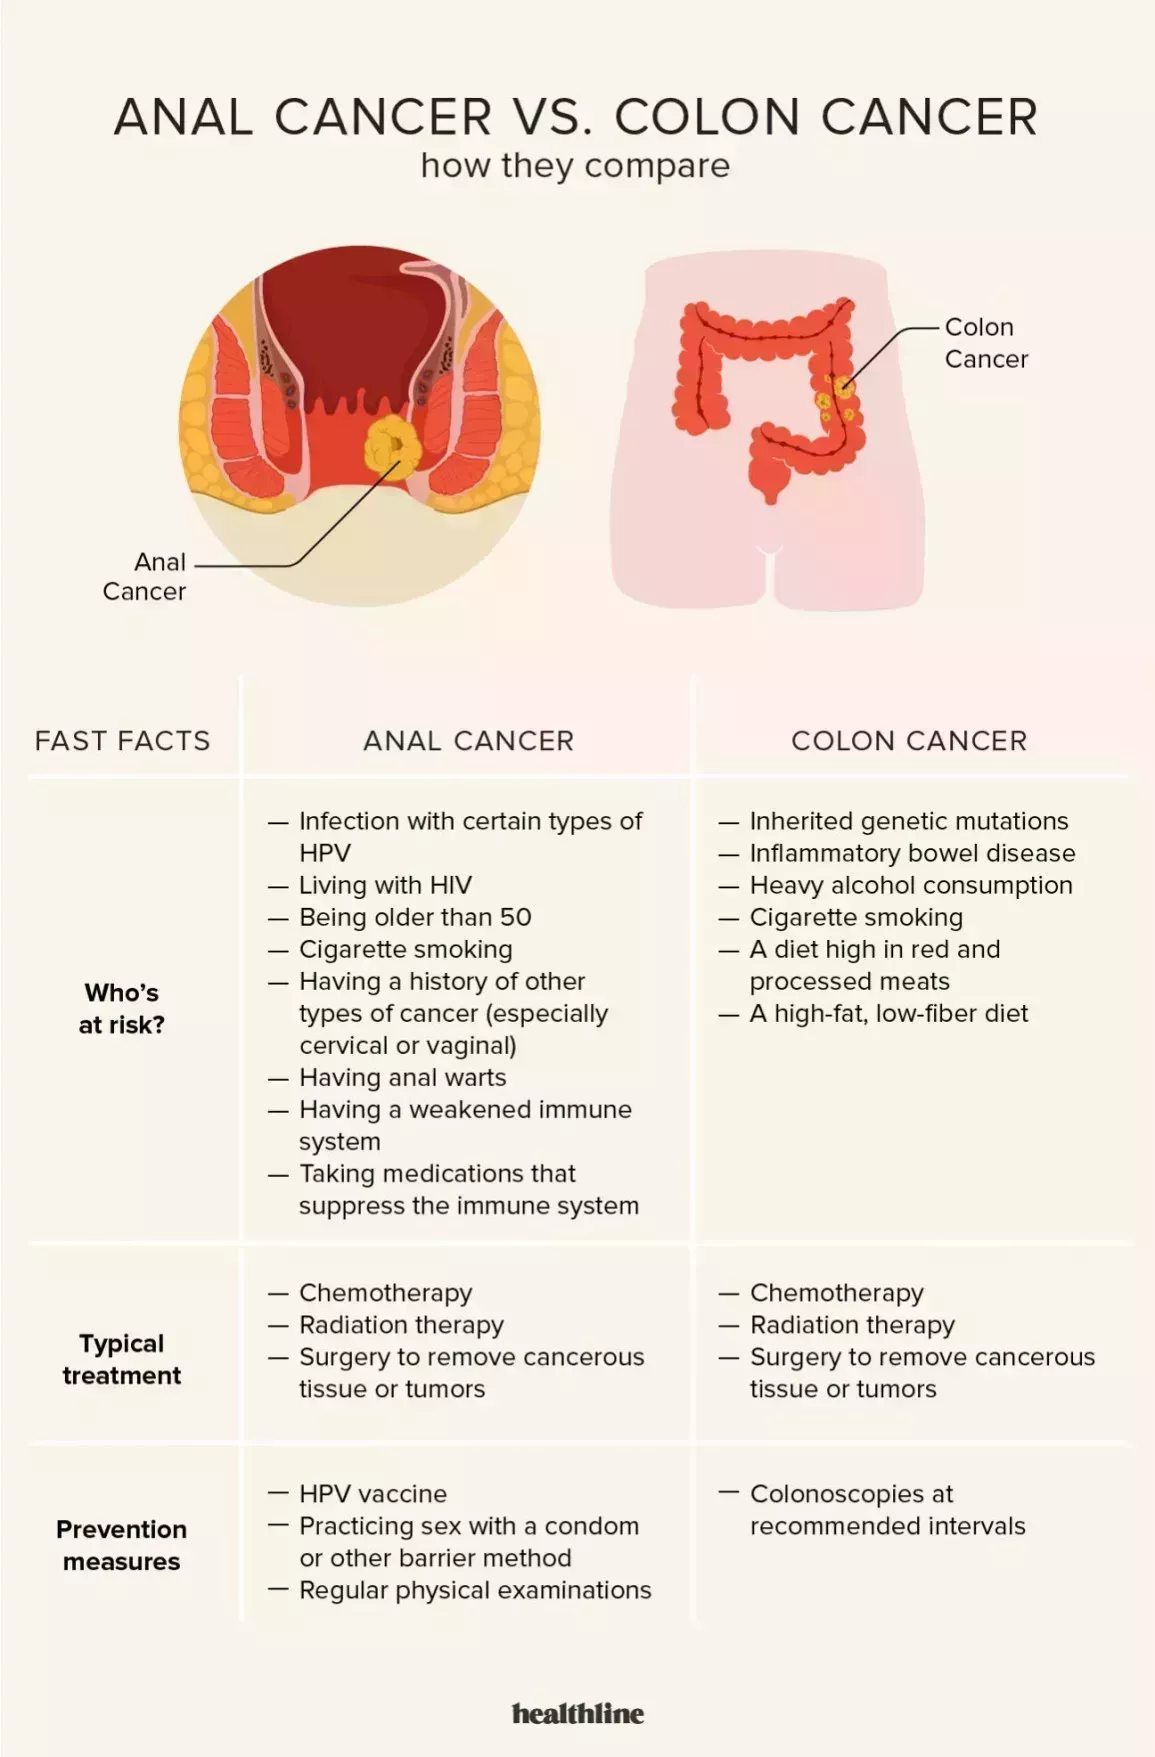 Anal cancer vs colon cancer comparison chart